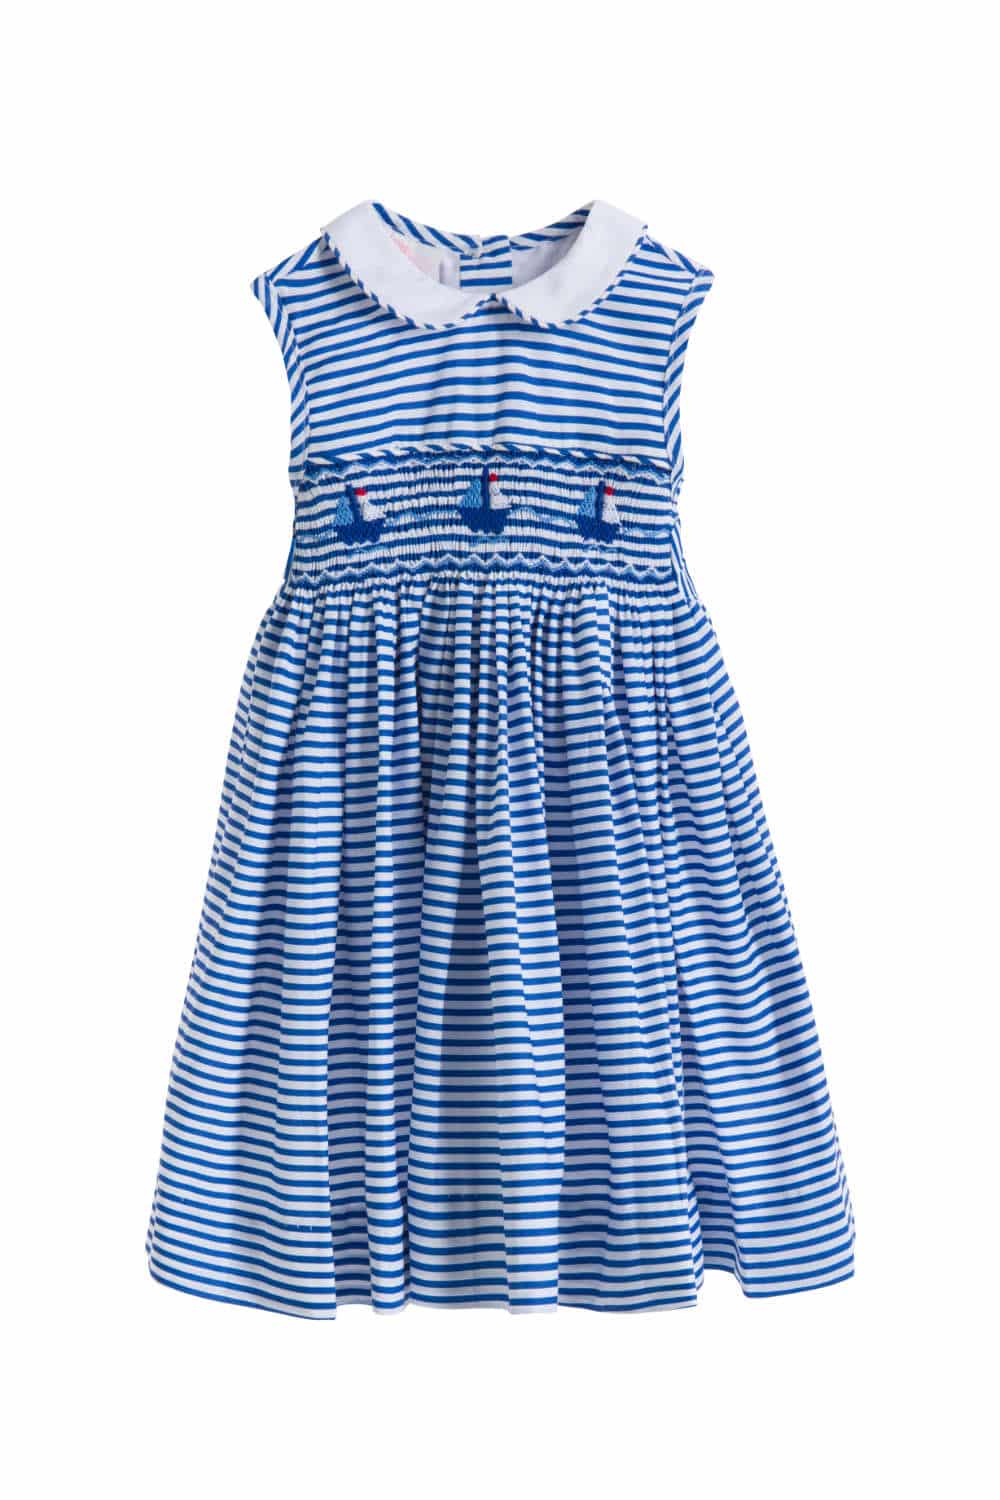 Charlotte | Blue & White Striped Hand Smocked Sailing Dress - Annafie